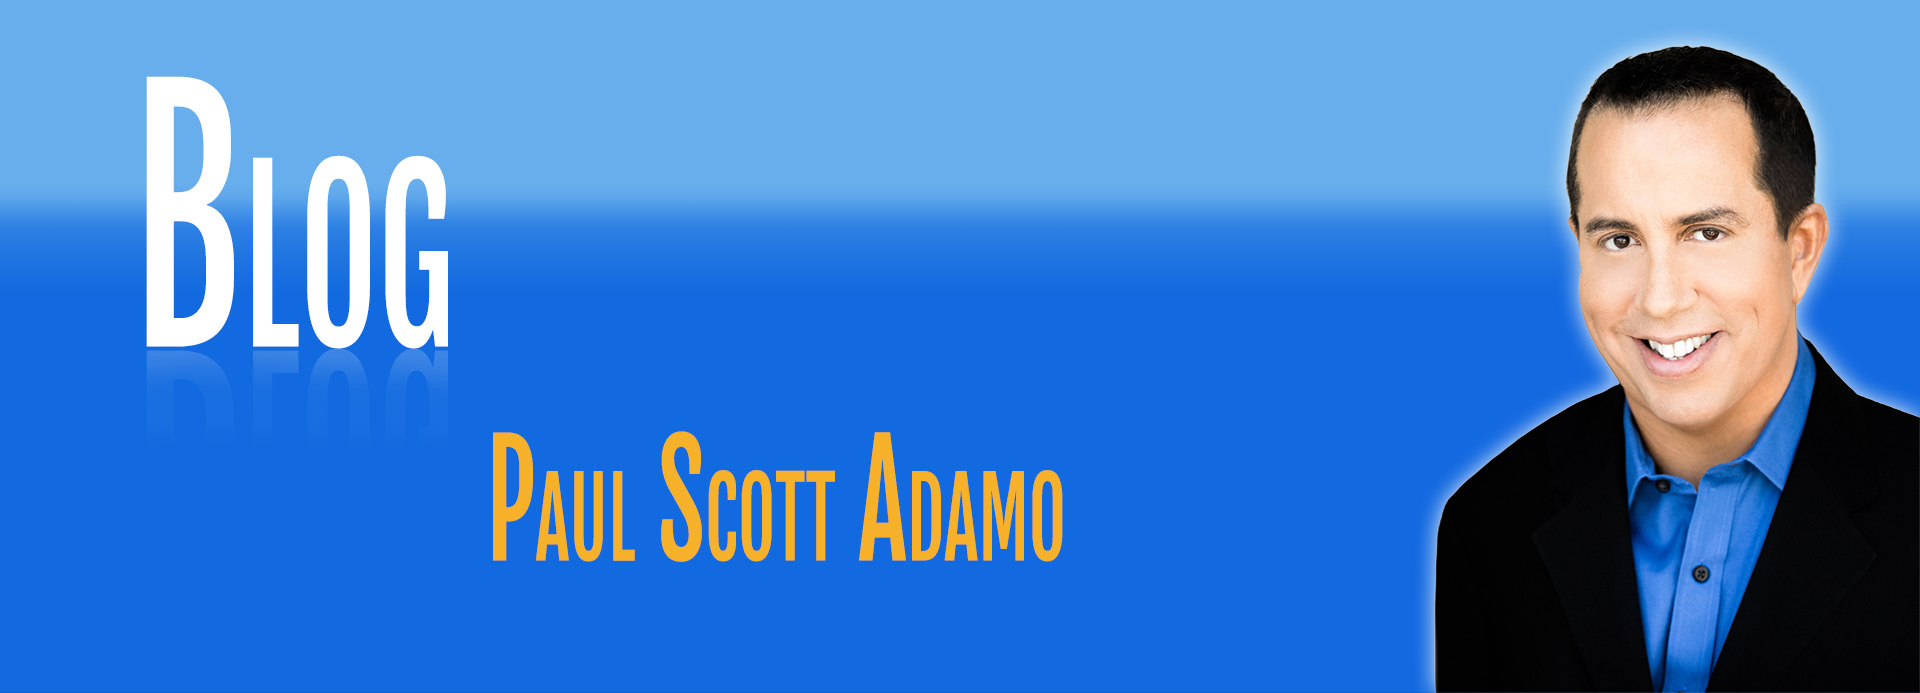 Paul Scott Adamo celebrity booker